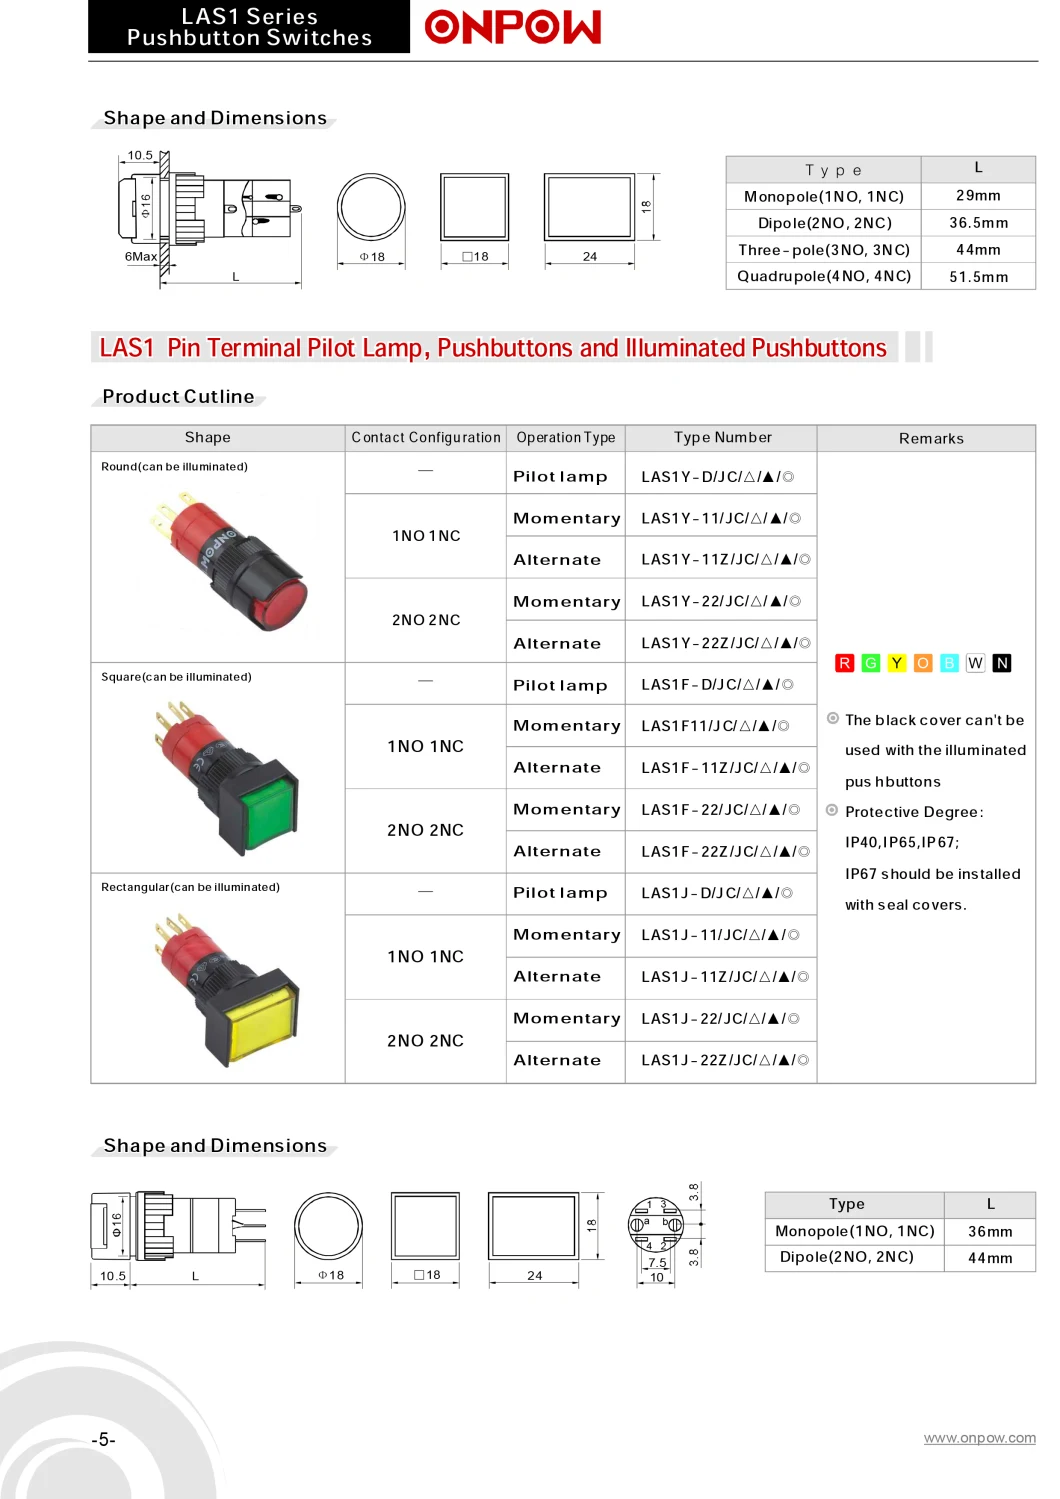 Onpow 16mm Square Push Button Switch (LAS1DF-11/G/12V, CE, CCC, RoHS, REECH)